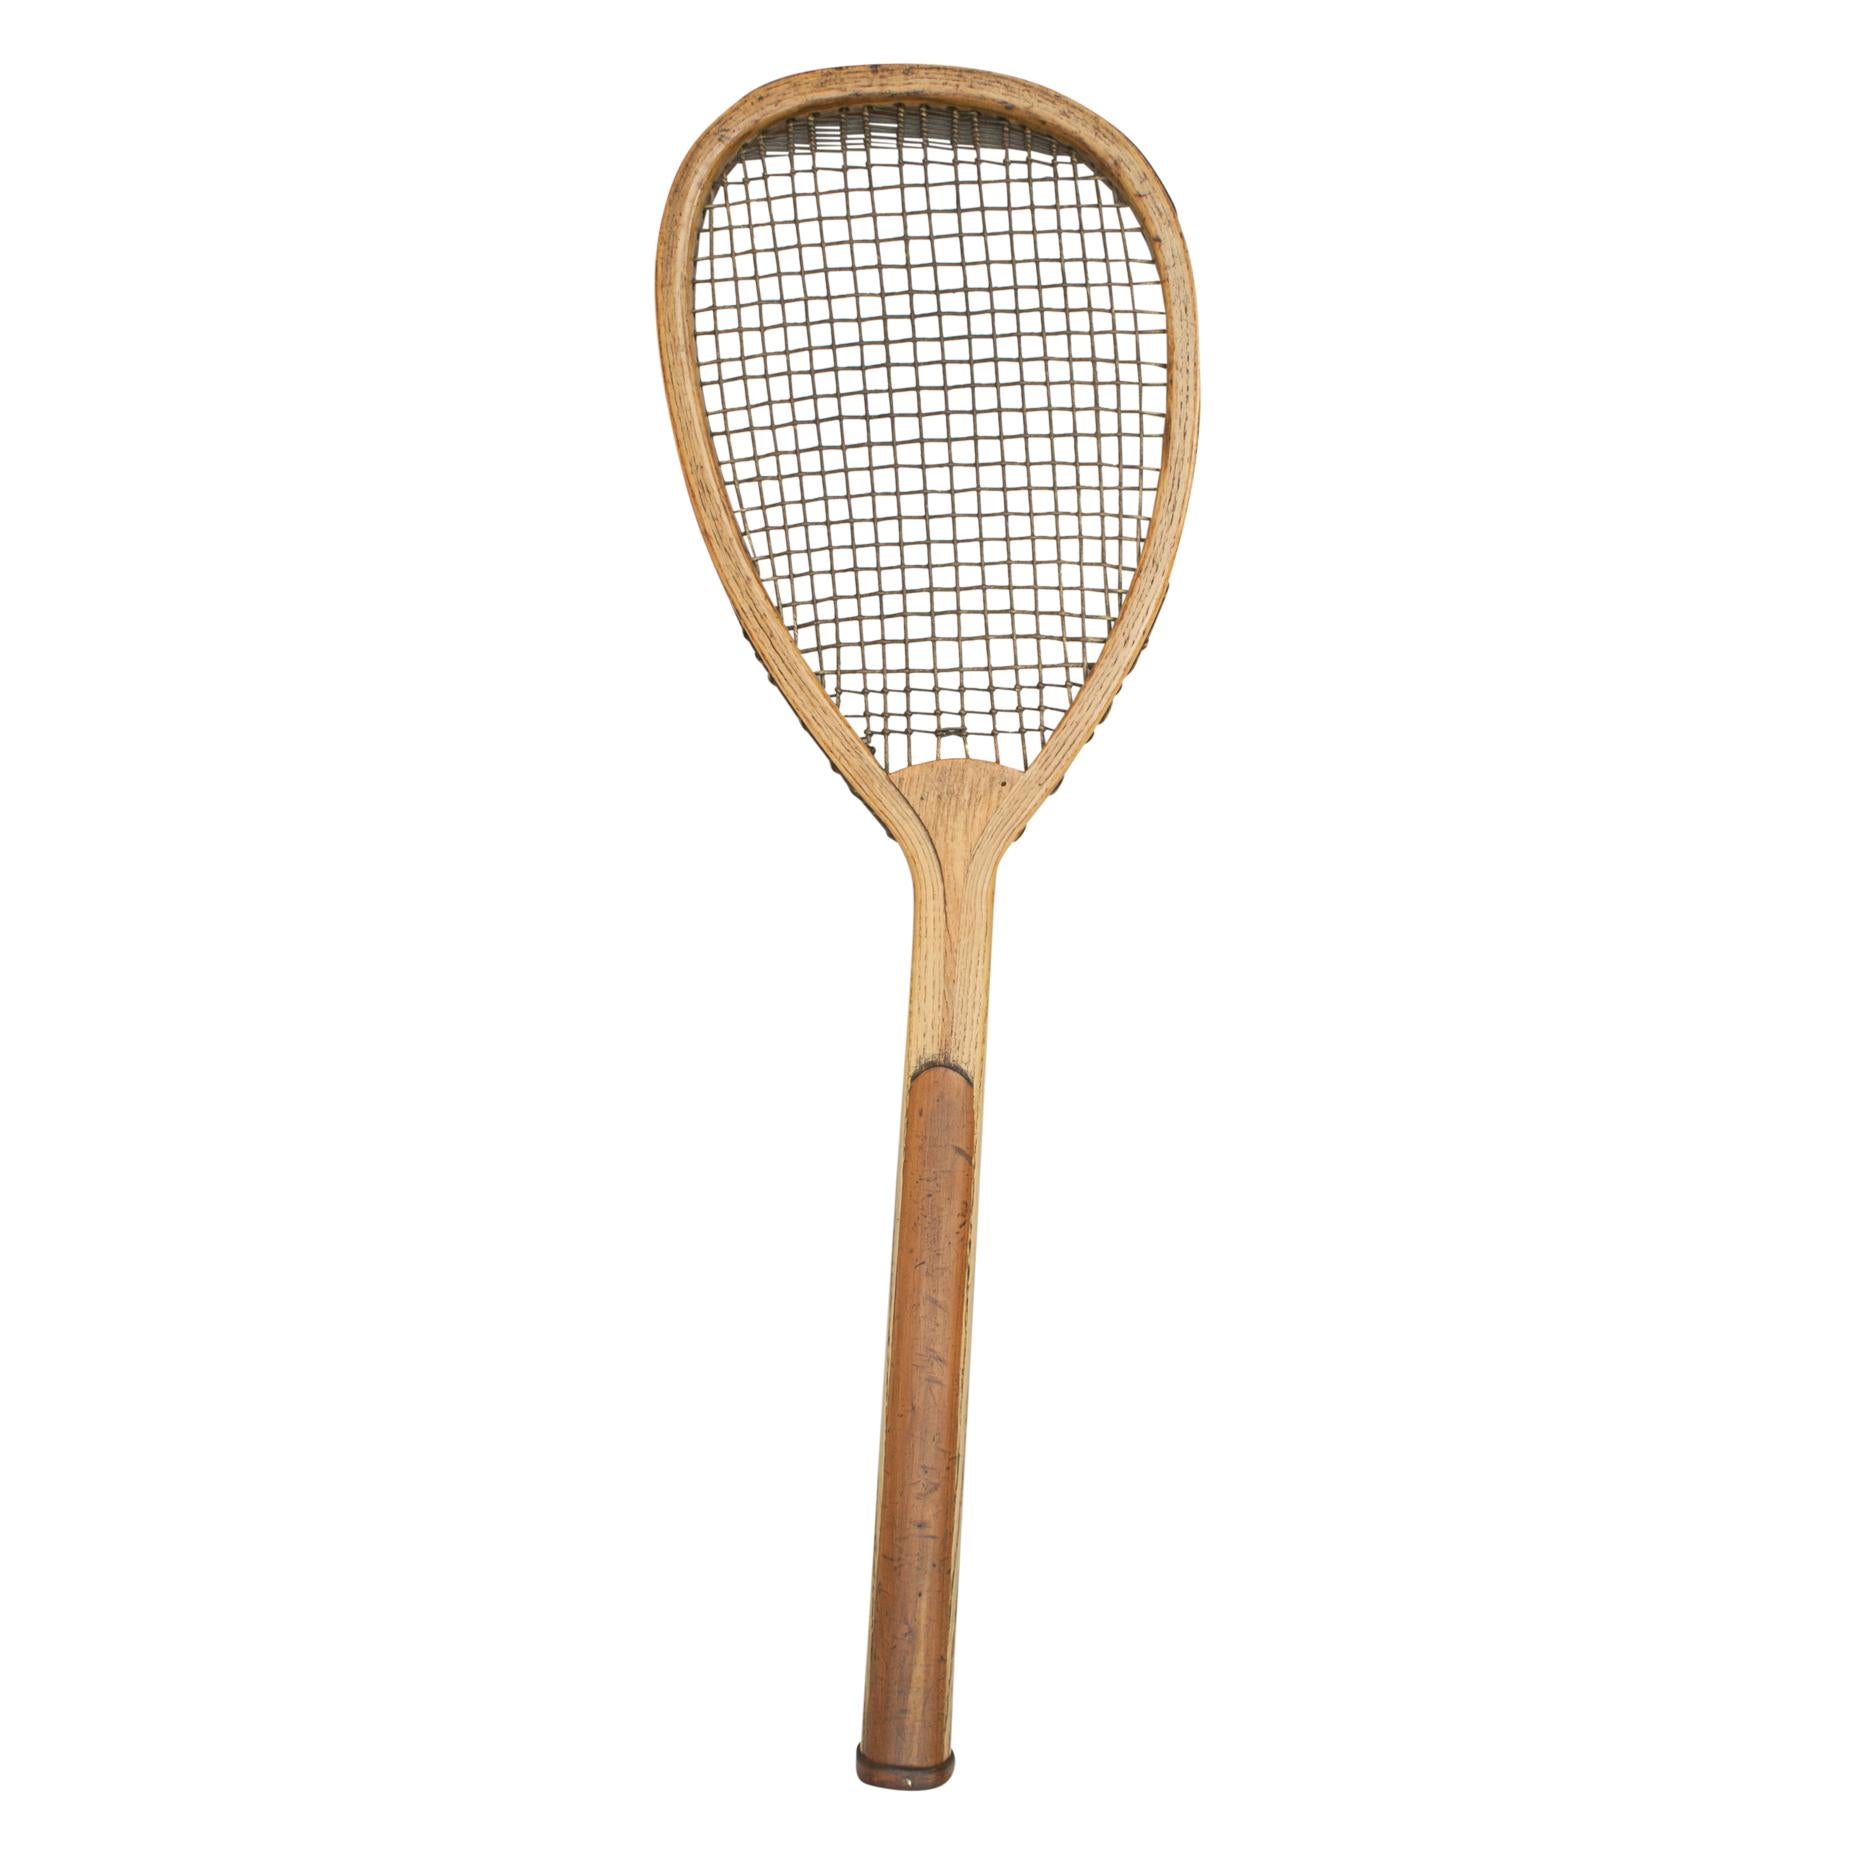 Sporting Art Charles Ward Lawn Tennis Racket